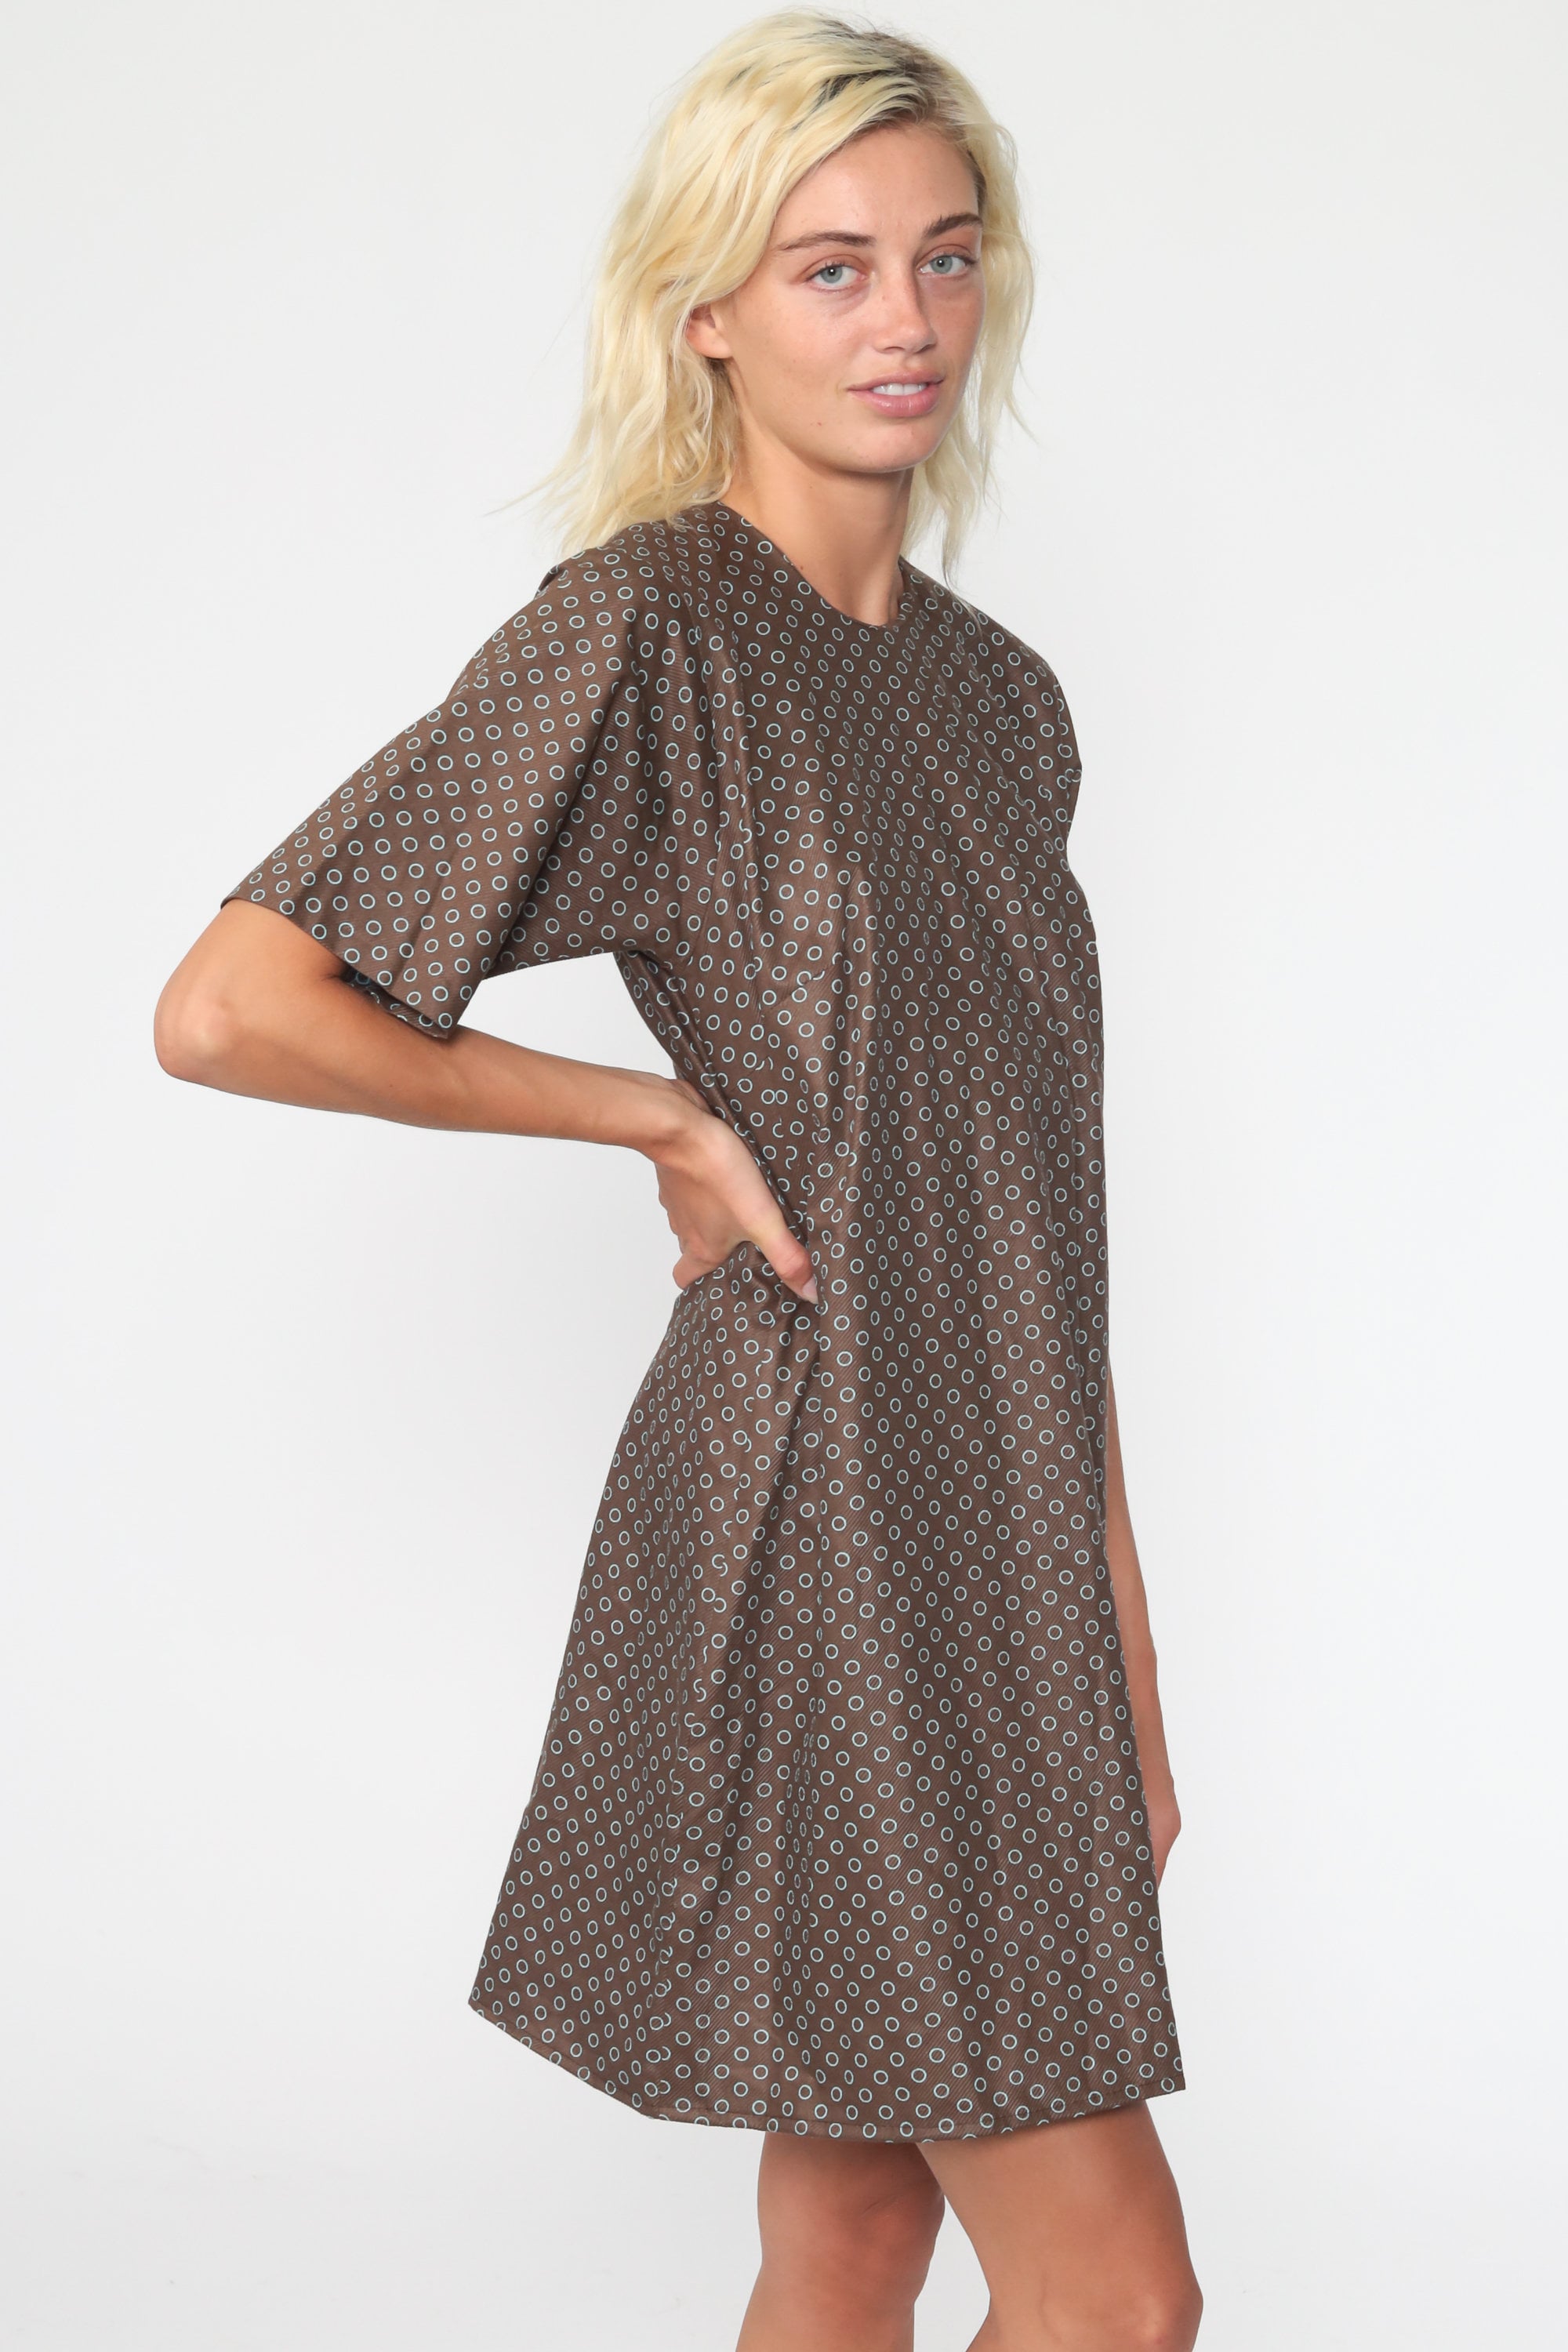 Mod Mini Dress Brown Op Art Dress 60s Polka Dot Print 70s